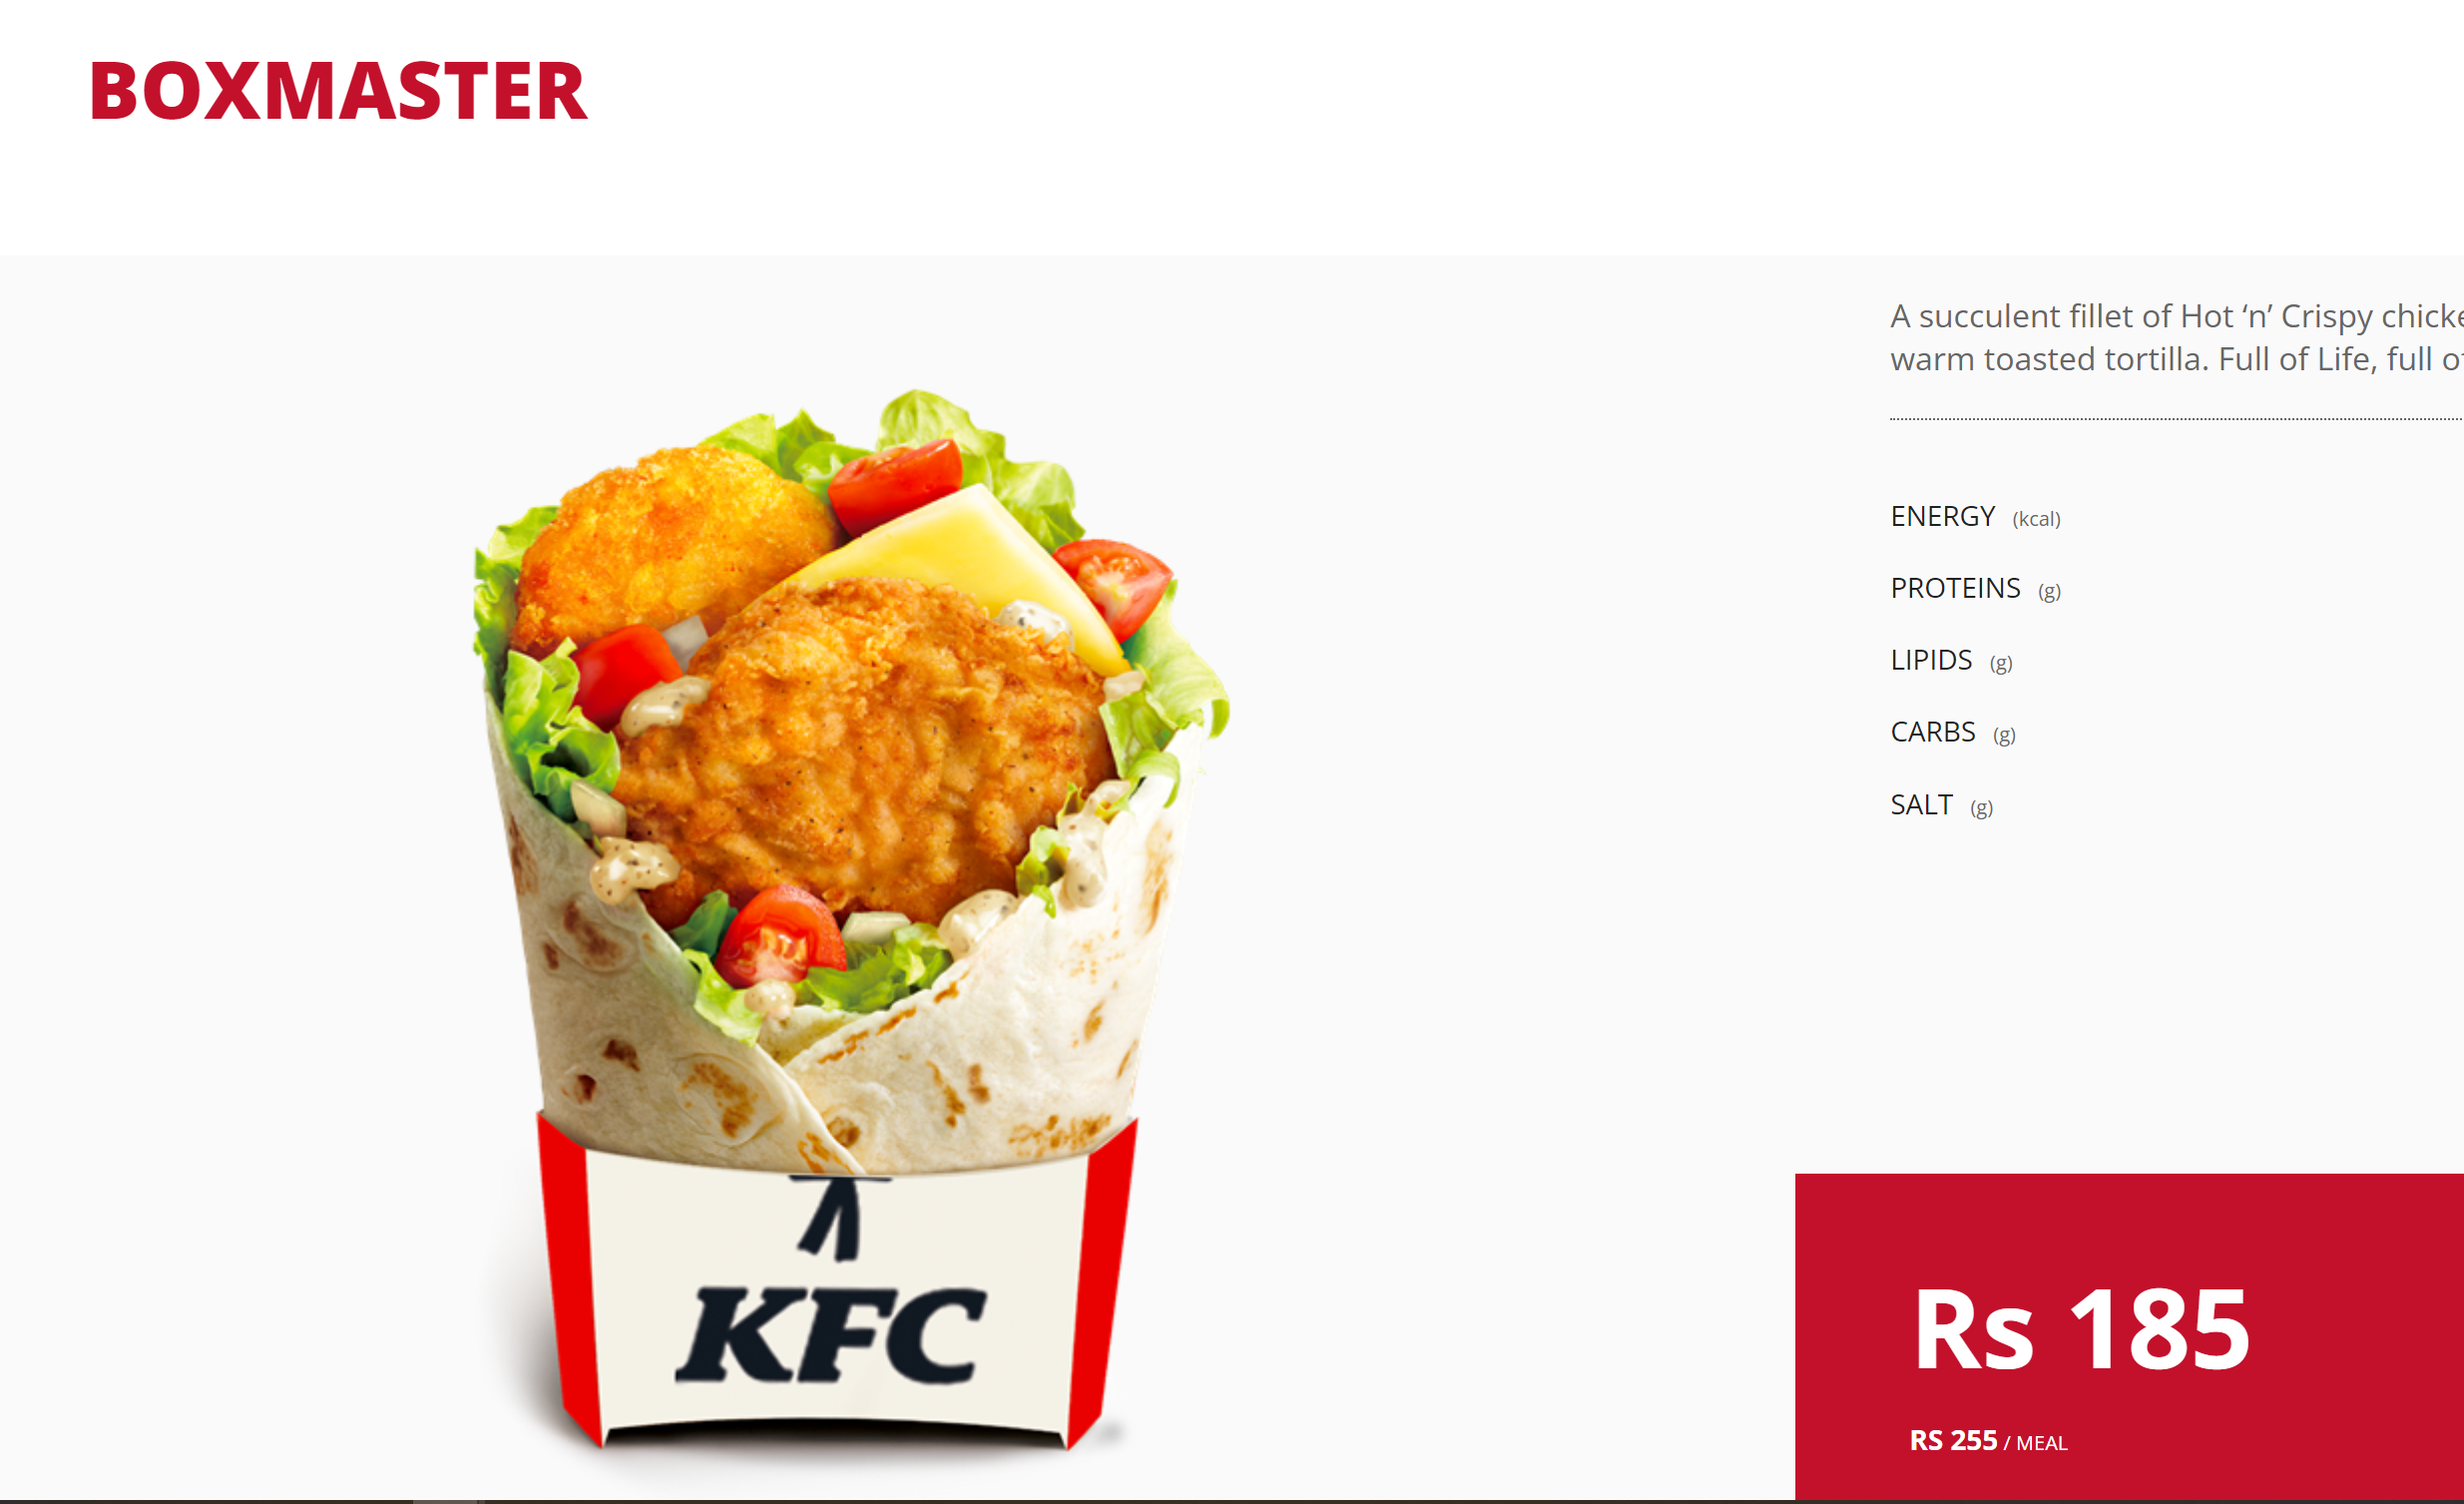 KFC Boxmaster Meal Mauritius